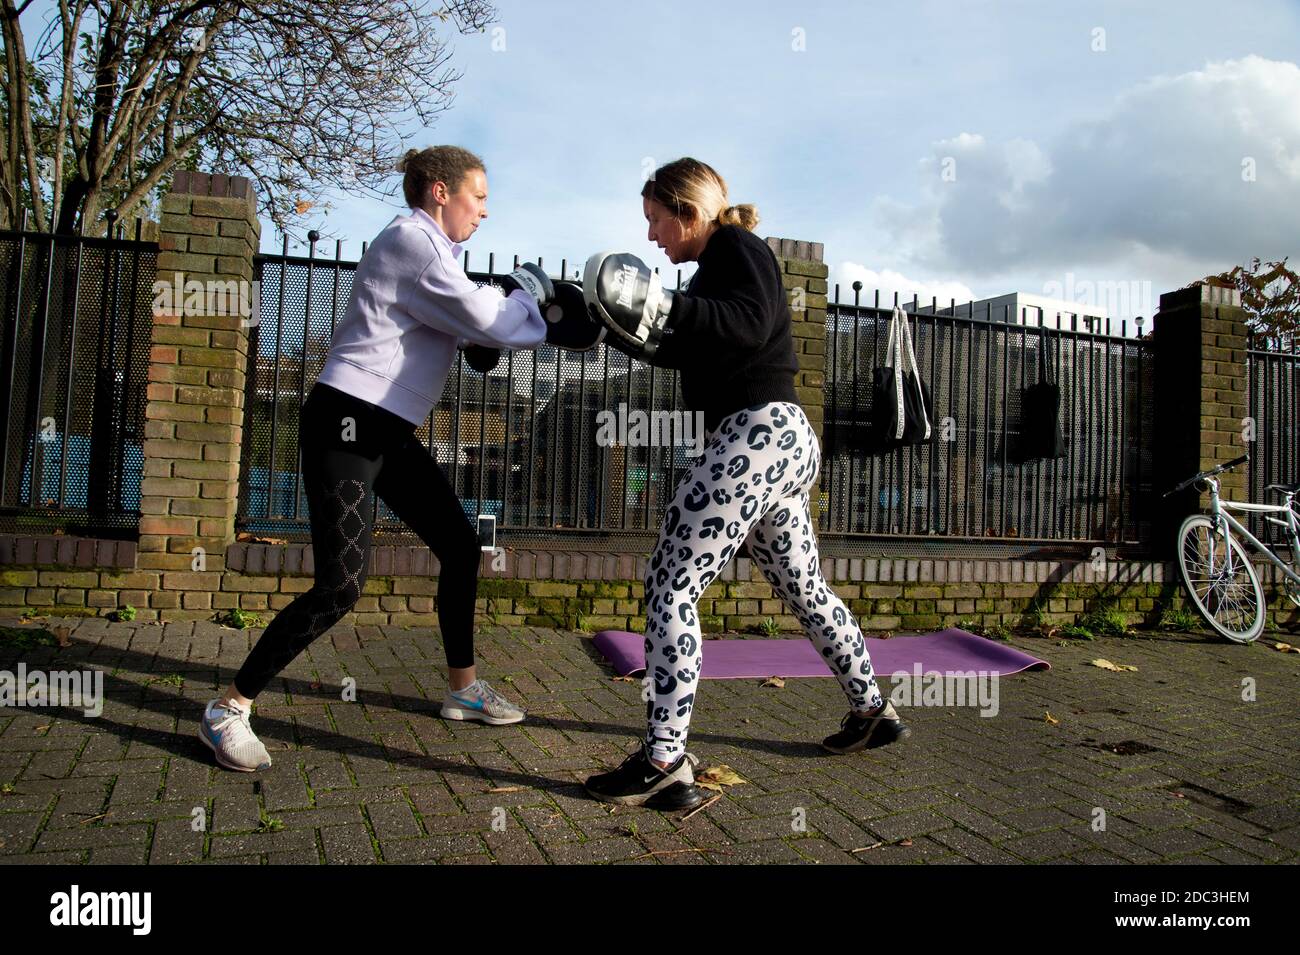 Hackney, London November 2020 während der Covid-19 (Coronavirus) Pandemie. Sperre 2. London Fields. Zwei junge Frauen üben Kickboxen. Stockfoto